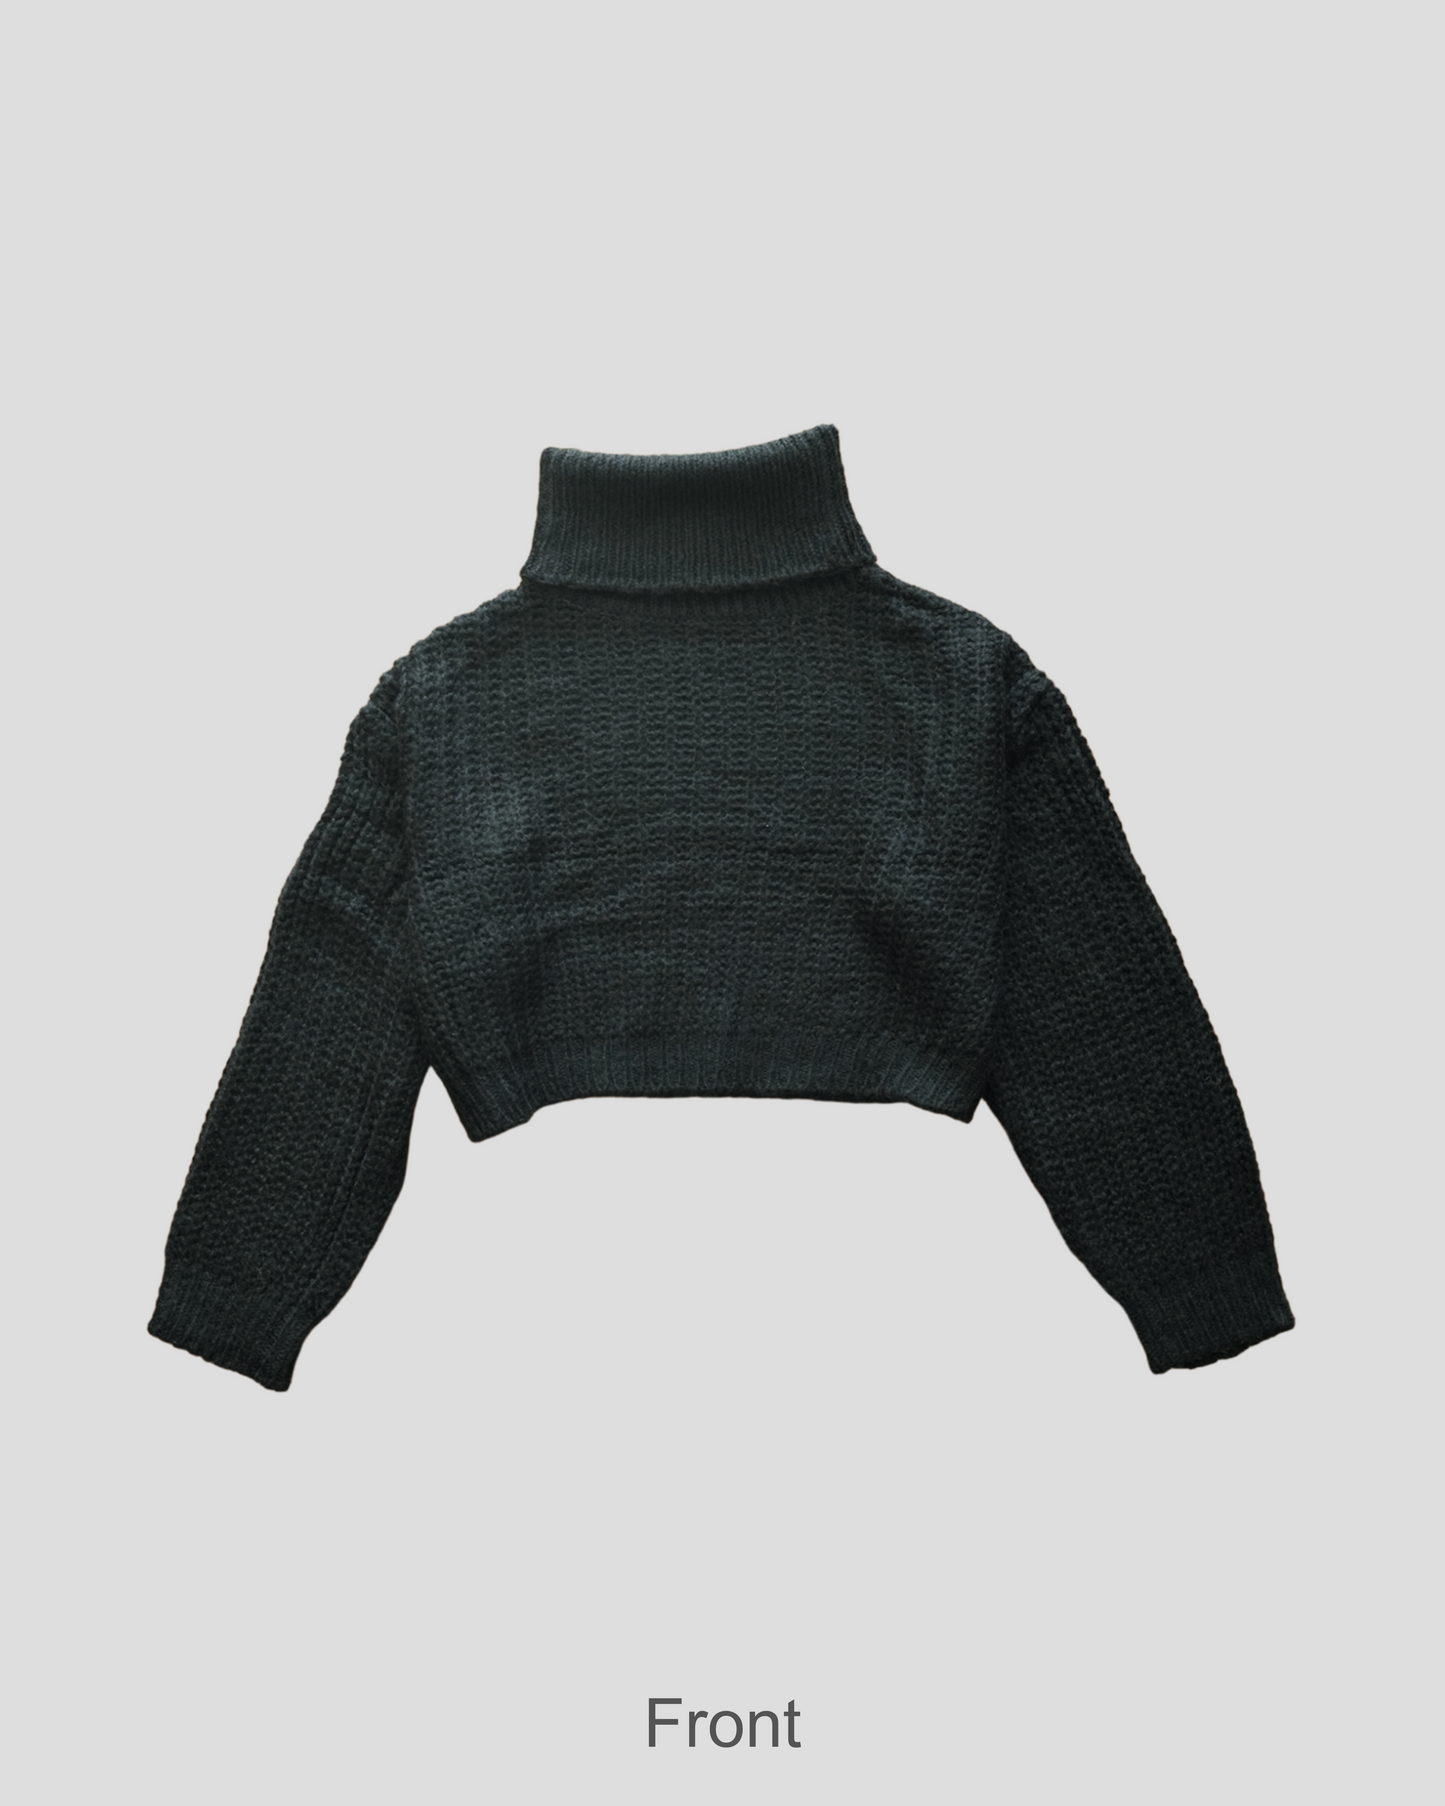 Turtle neck knit crop sweater